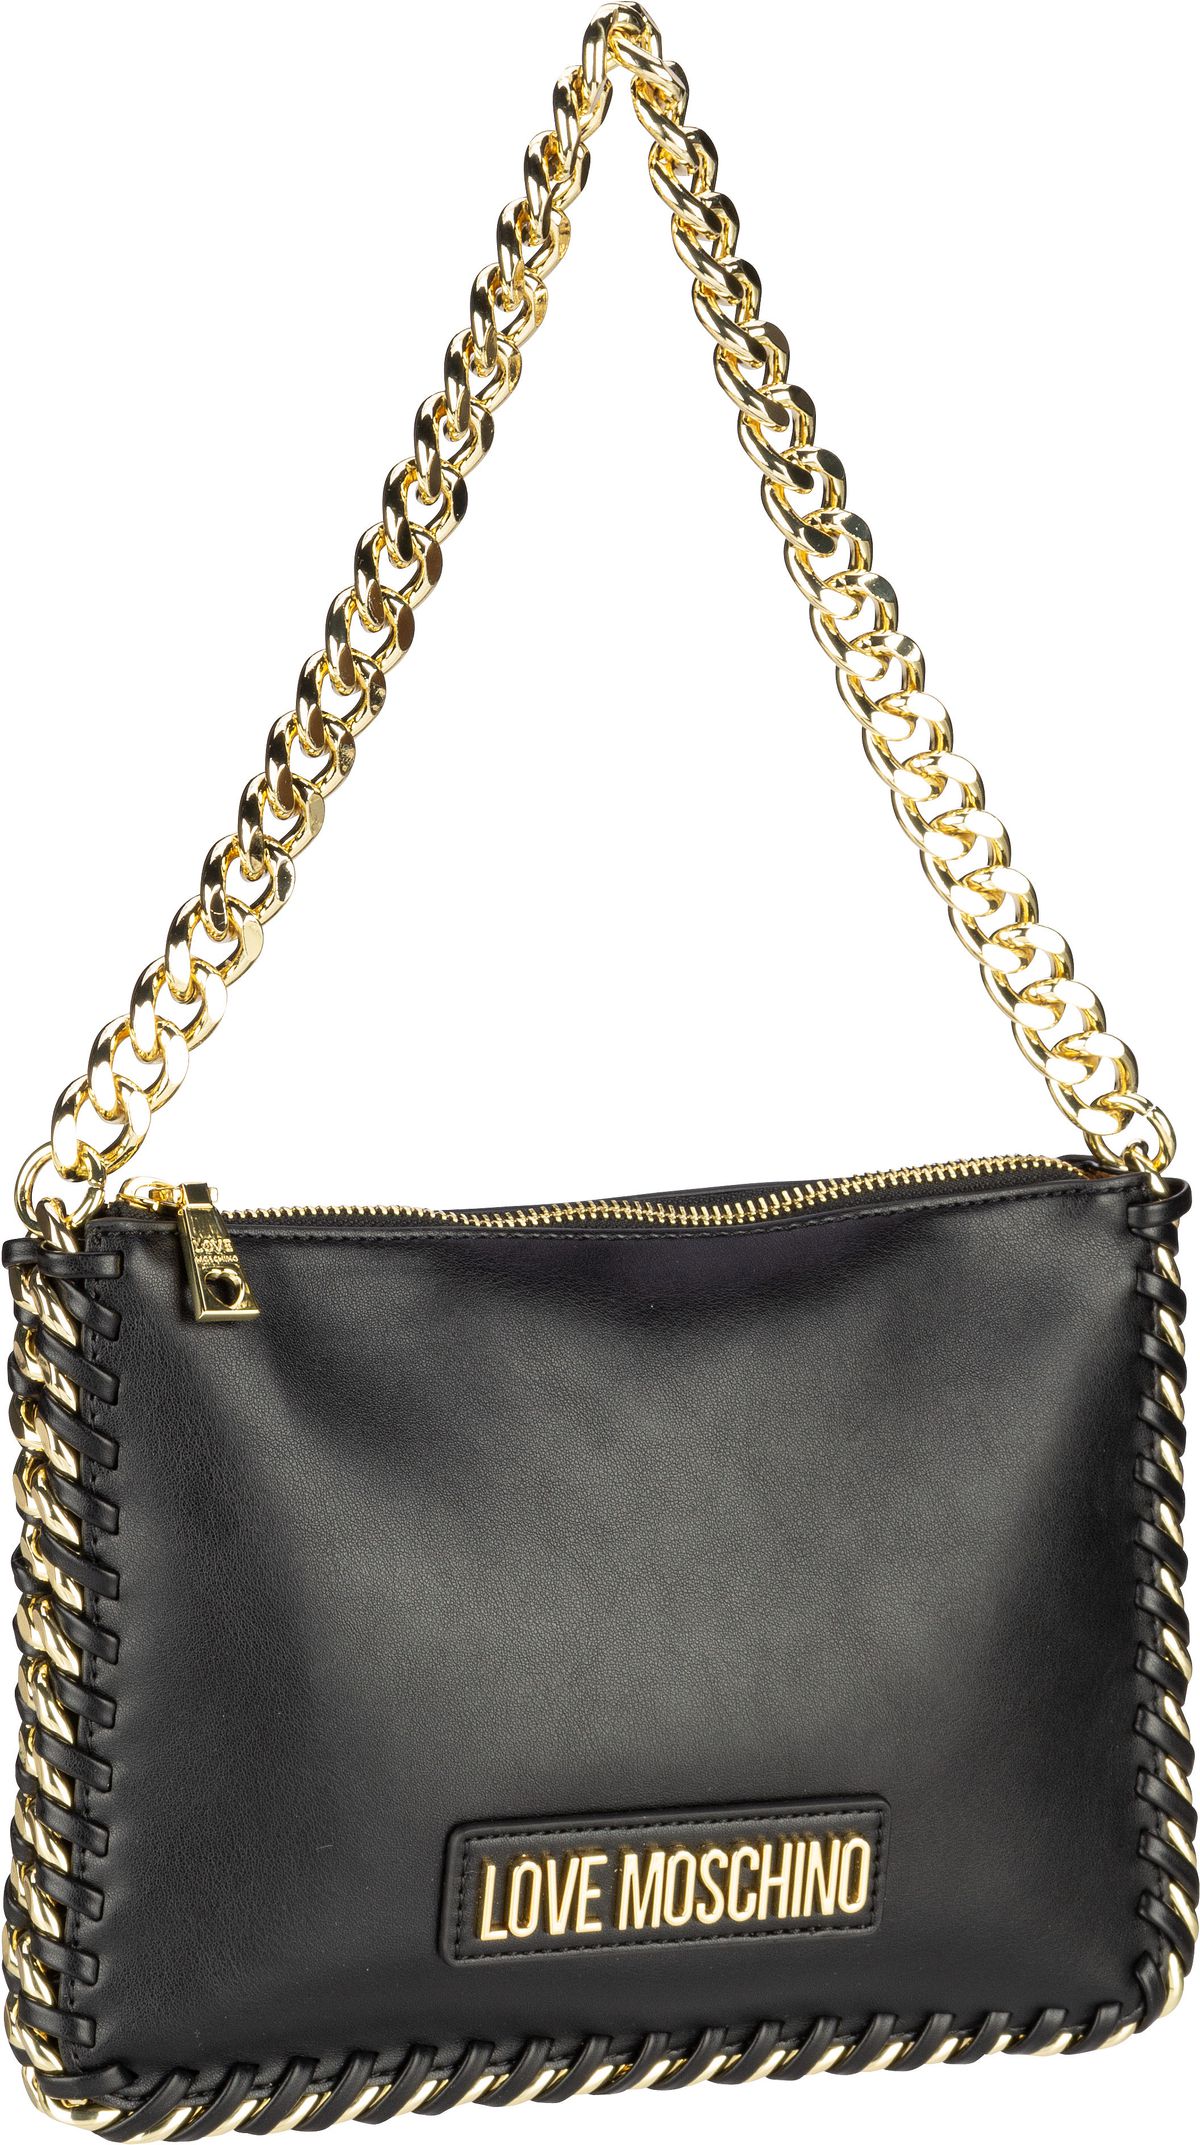 Love Moschino Chain Shoulder Bag 4245 - Black